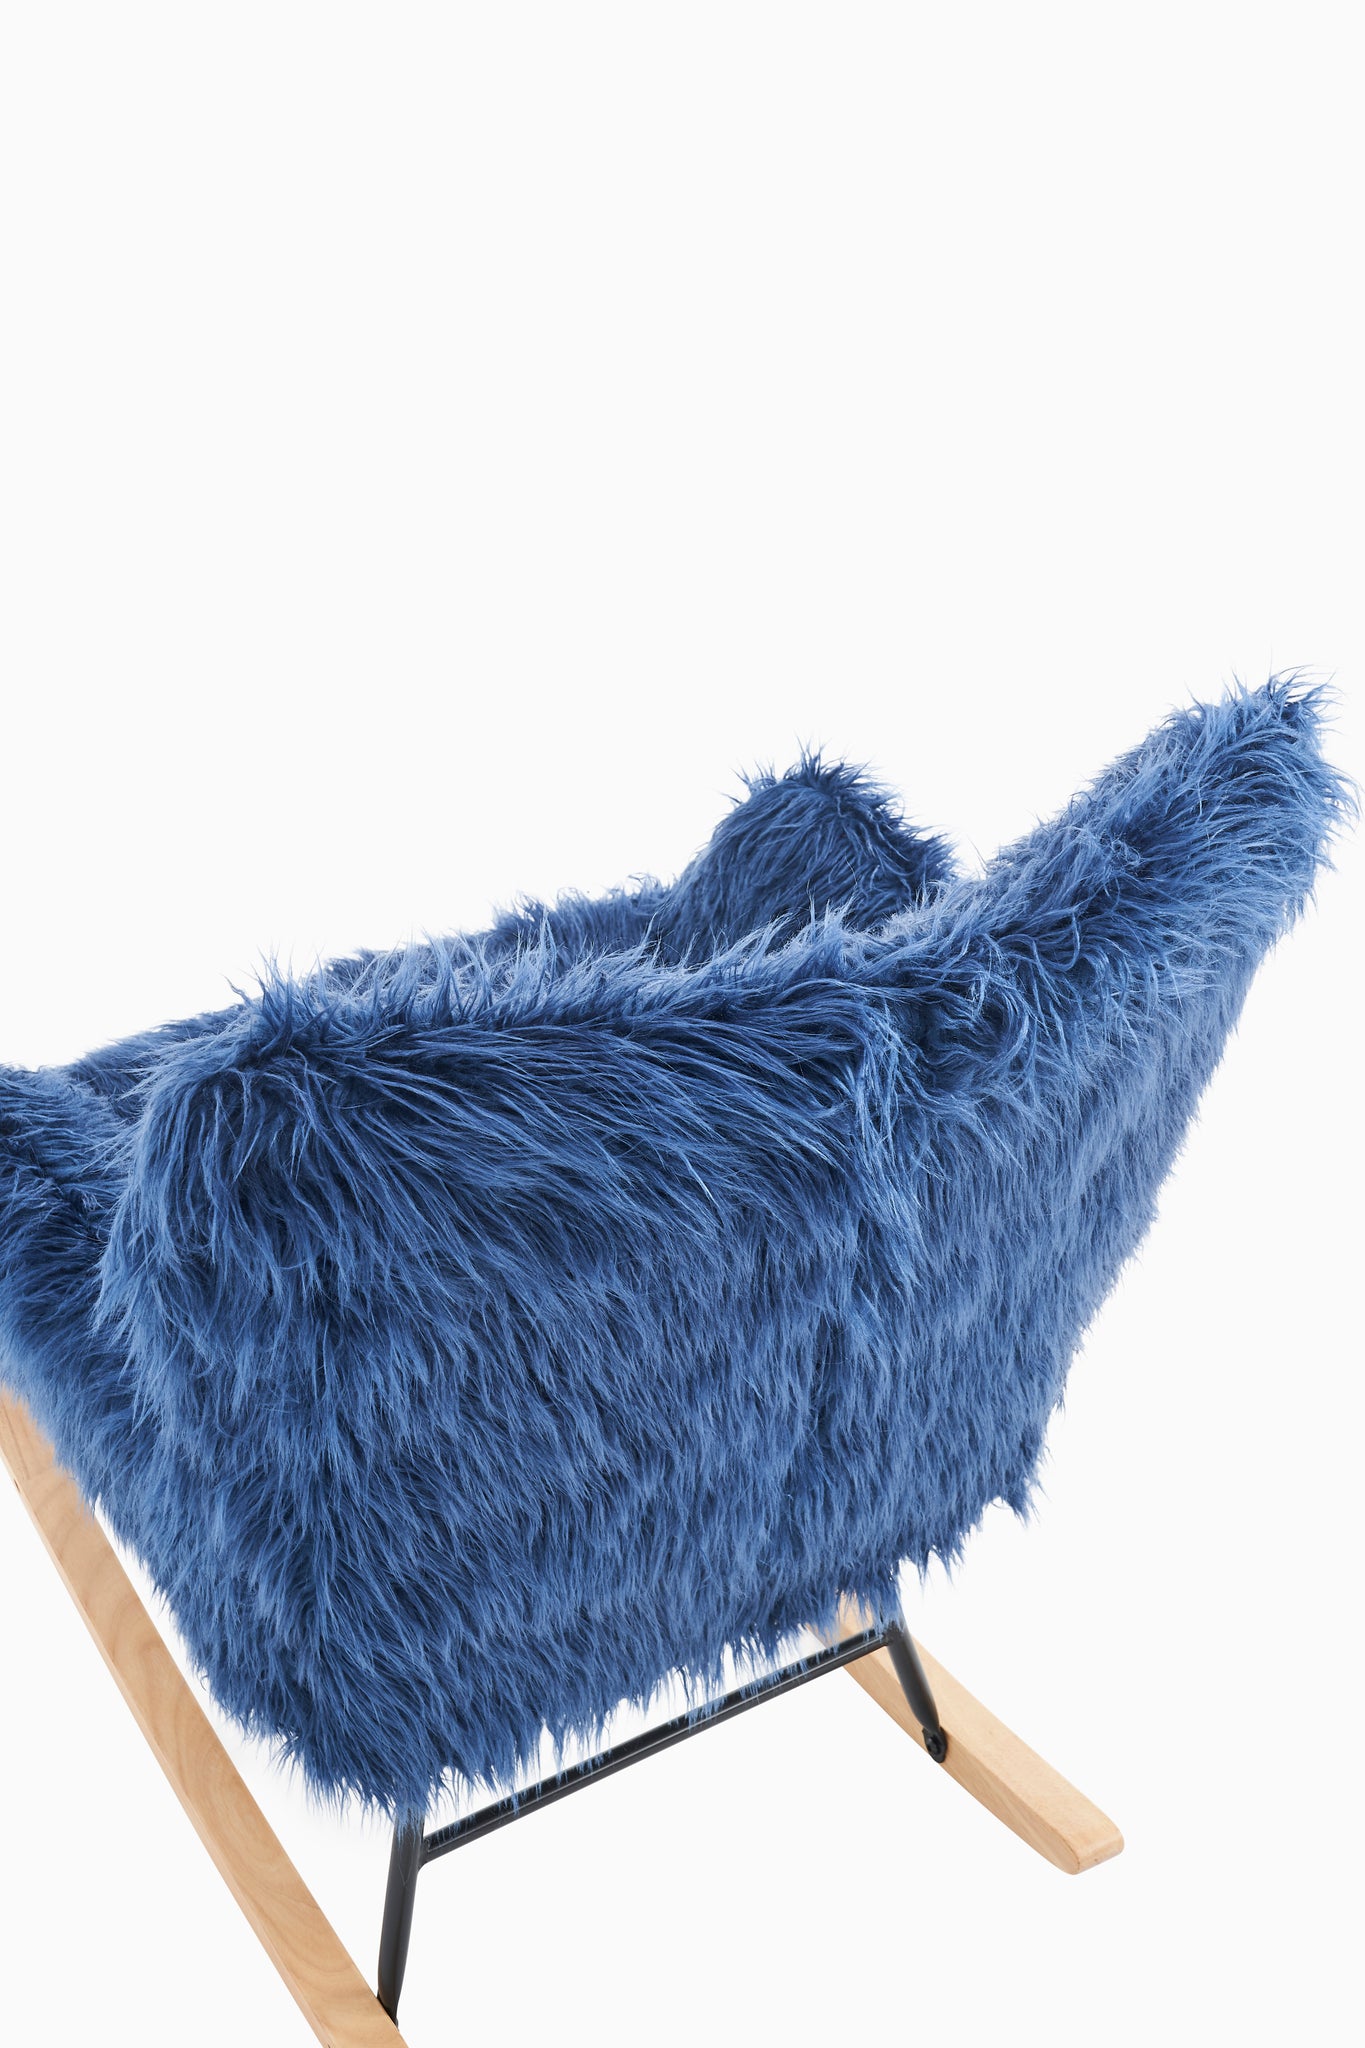 Rocking Chair Nursery, Solid Wood Legs Reading Chair blue-primary living space-sponge-modern-rocking